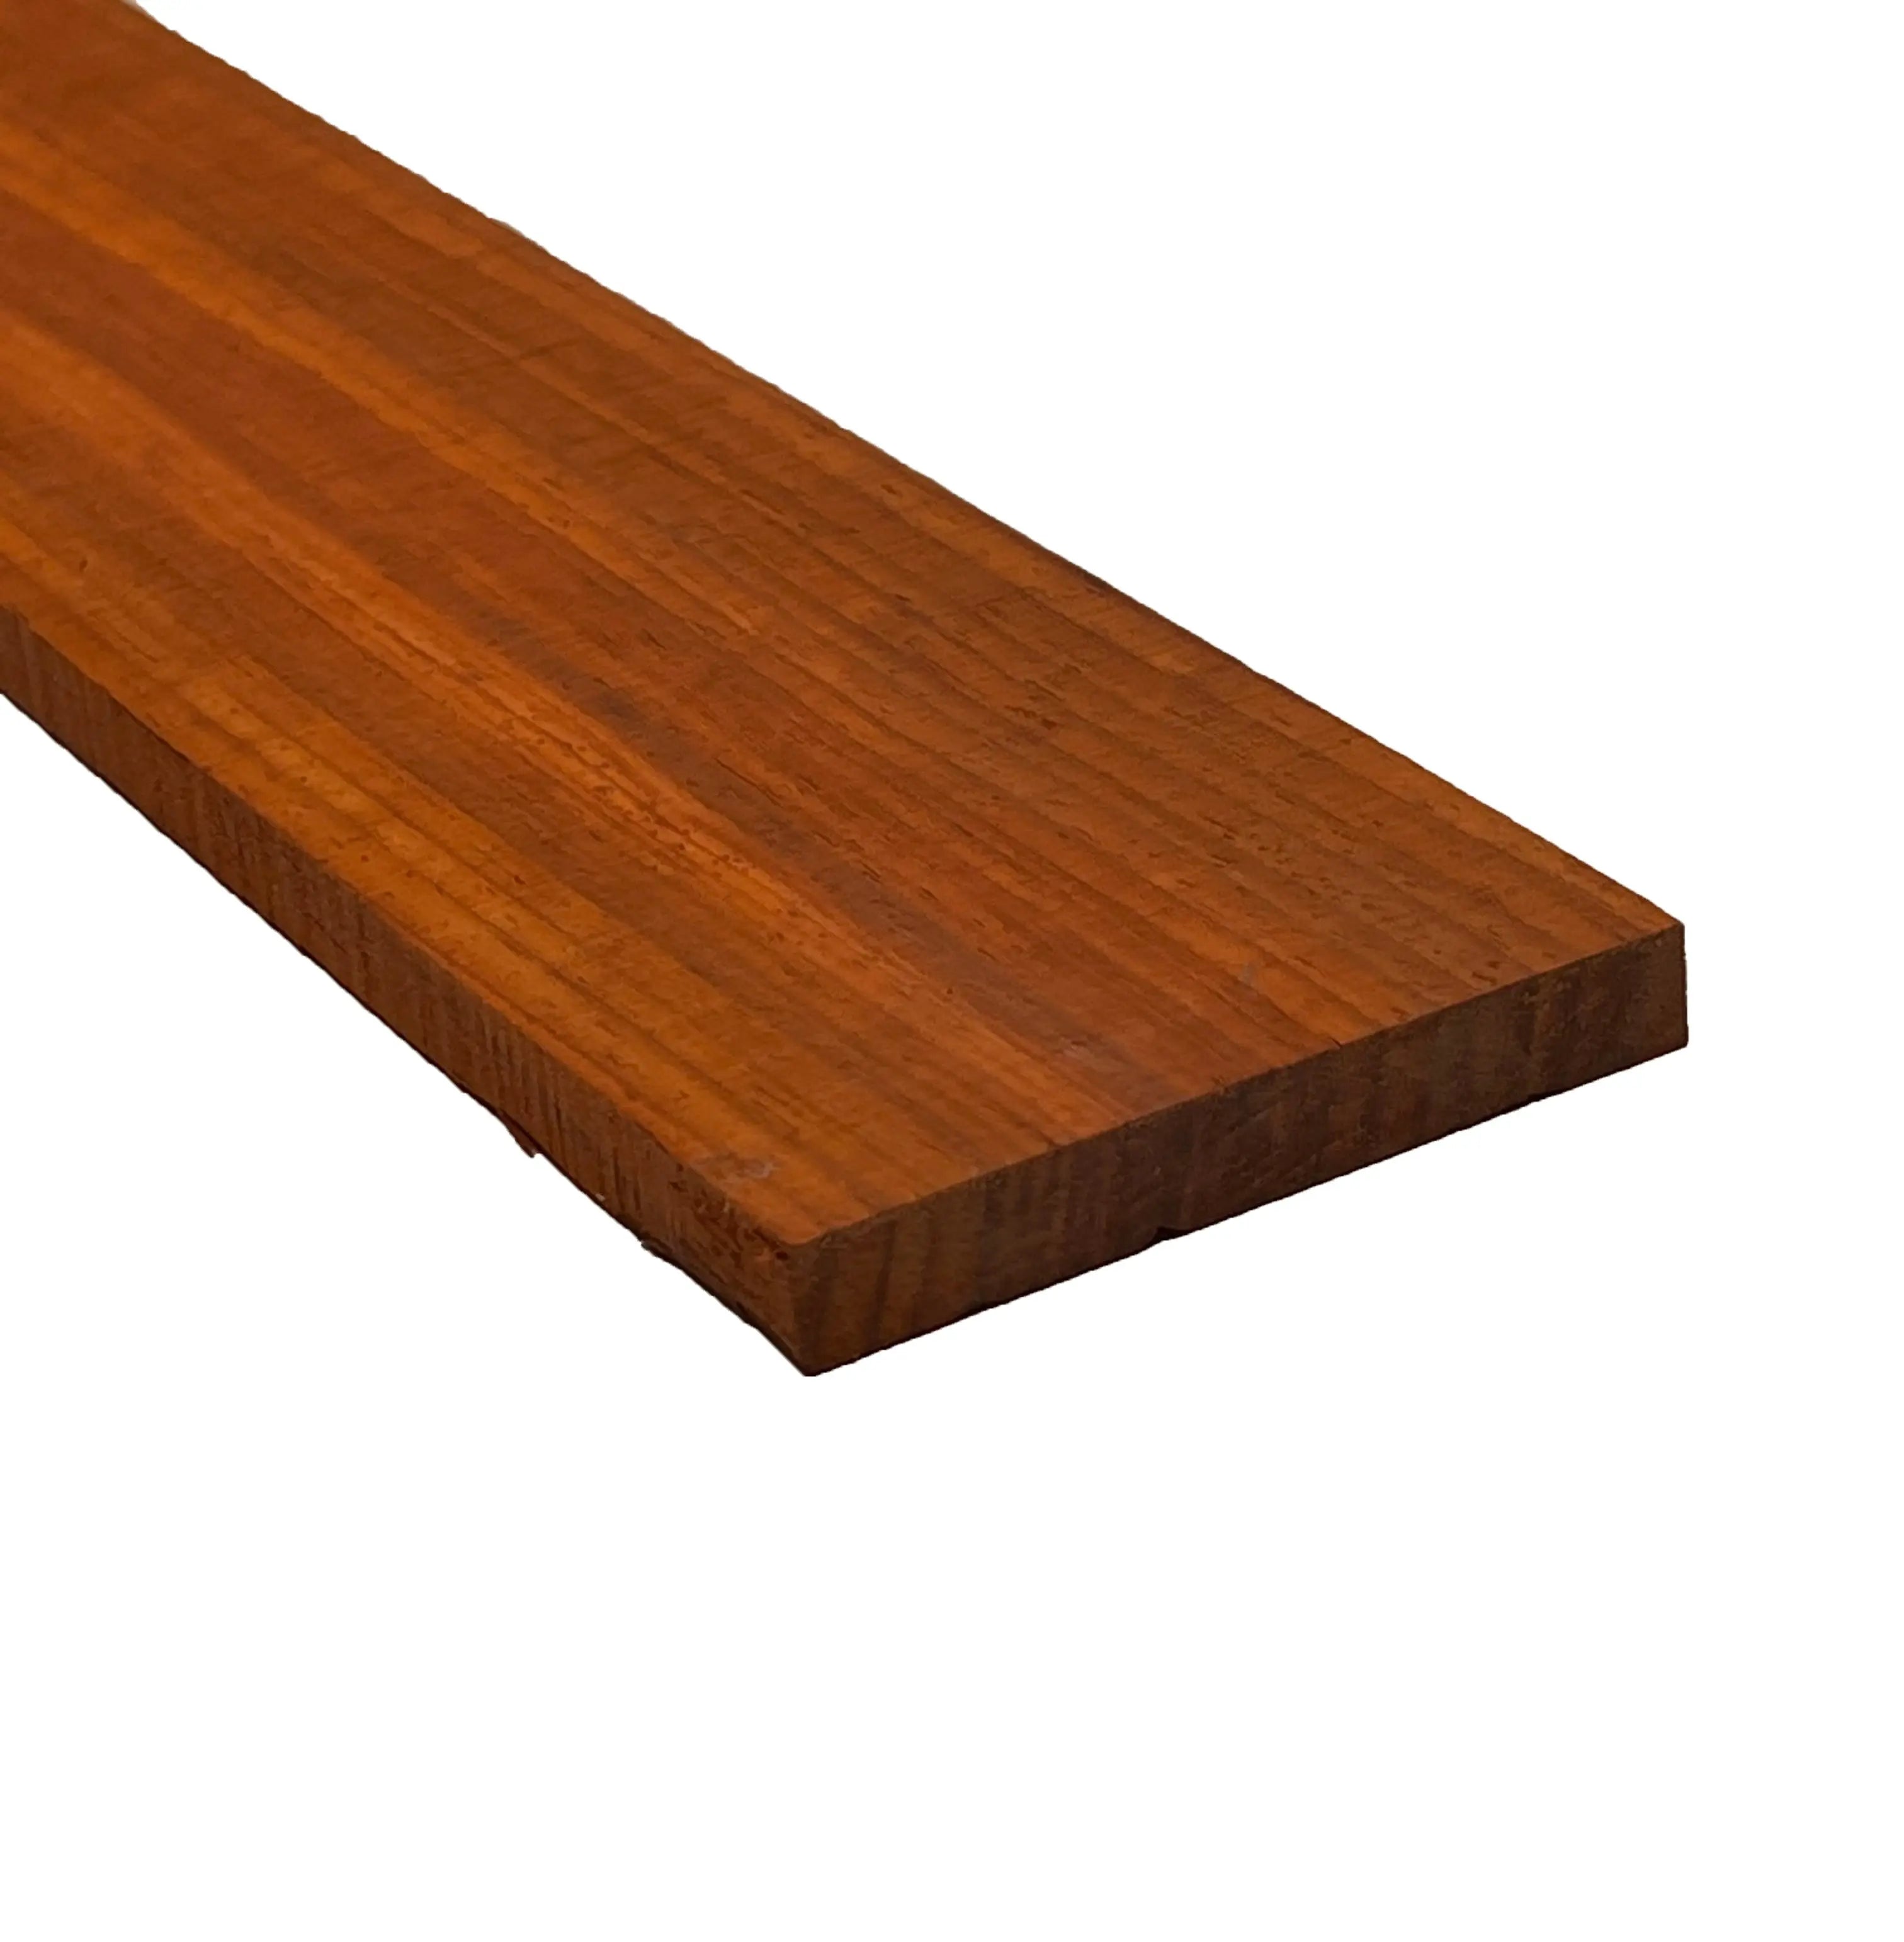 4 HARD MAPLE 3/4 x 4 x 36 Lumber Wood Boards KILN DRY DIY Shelf Sign  Craft